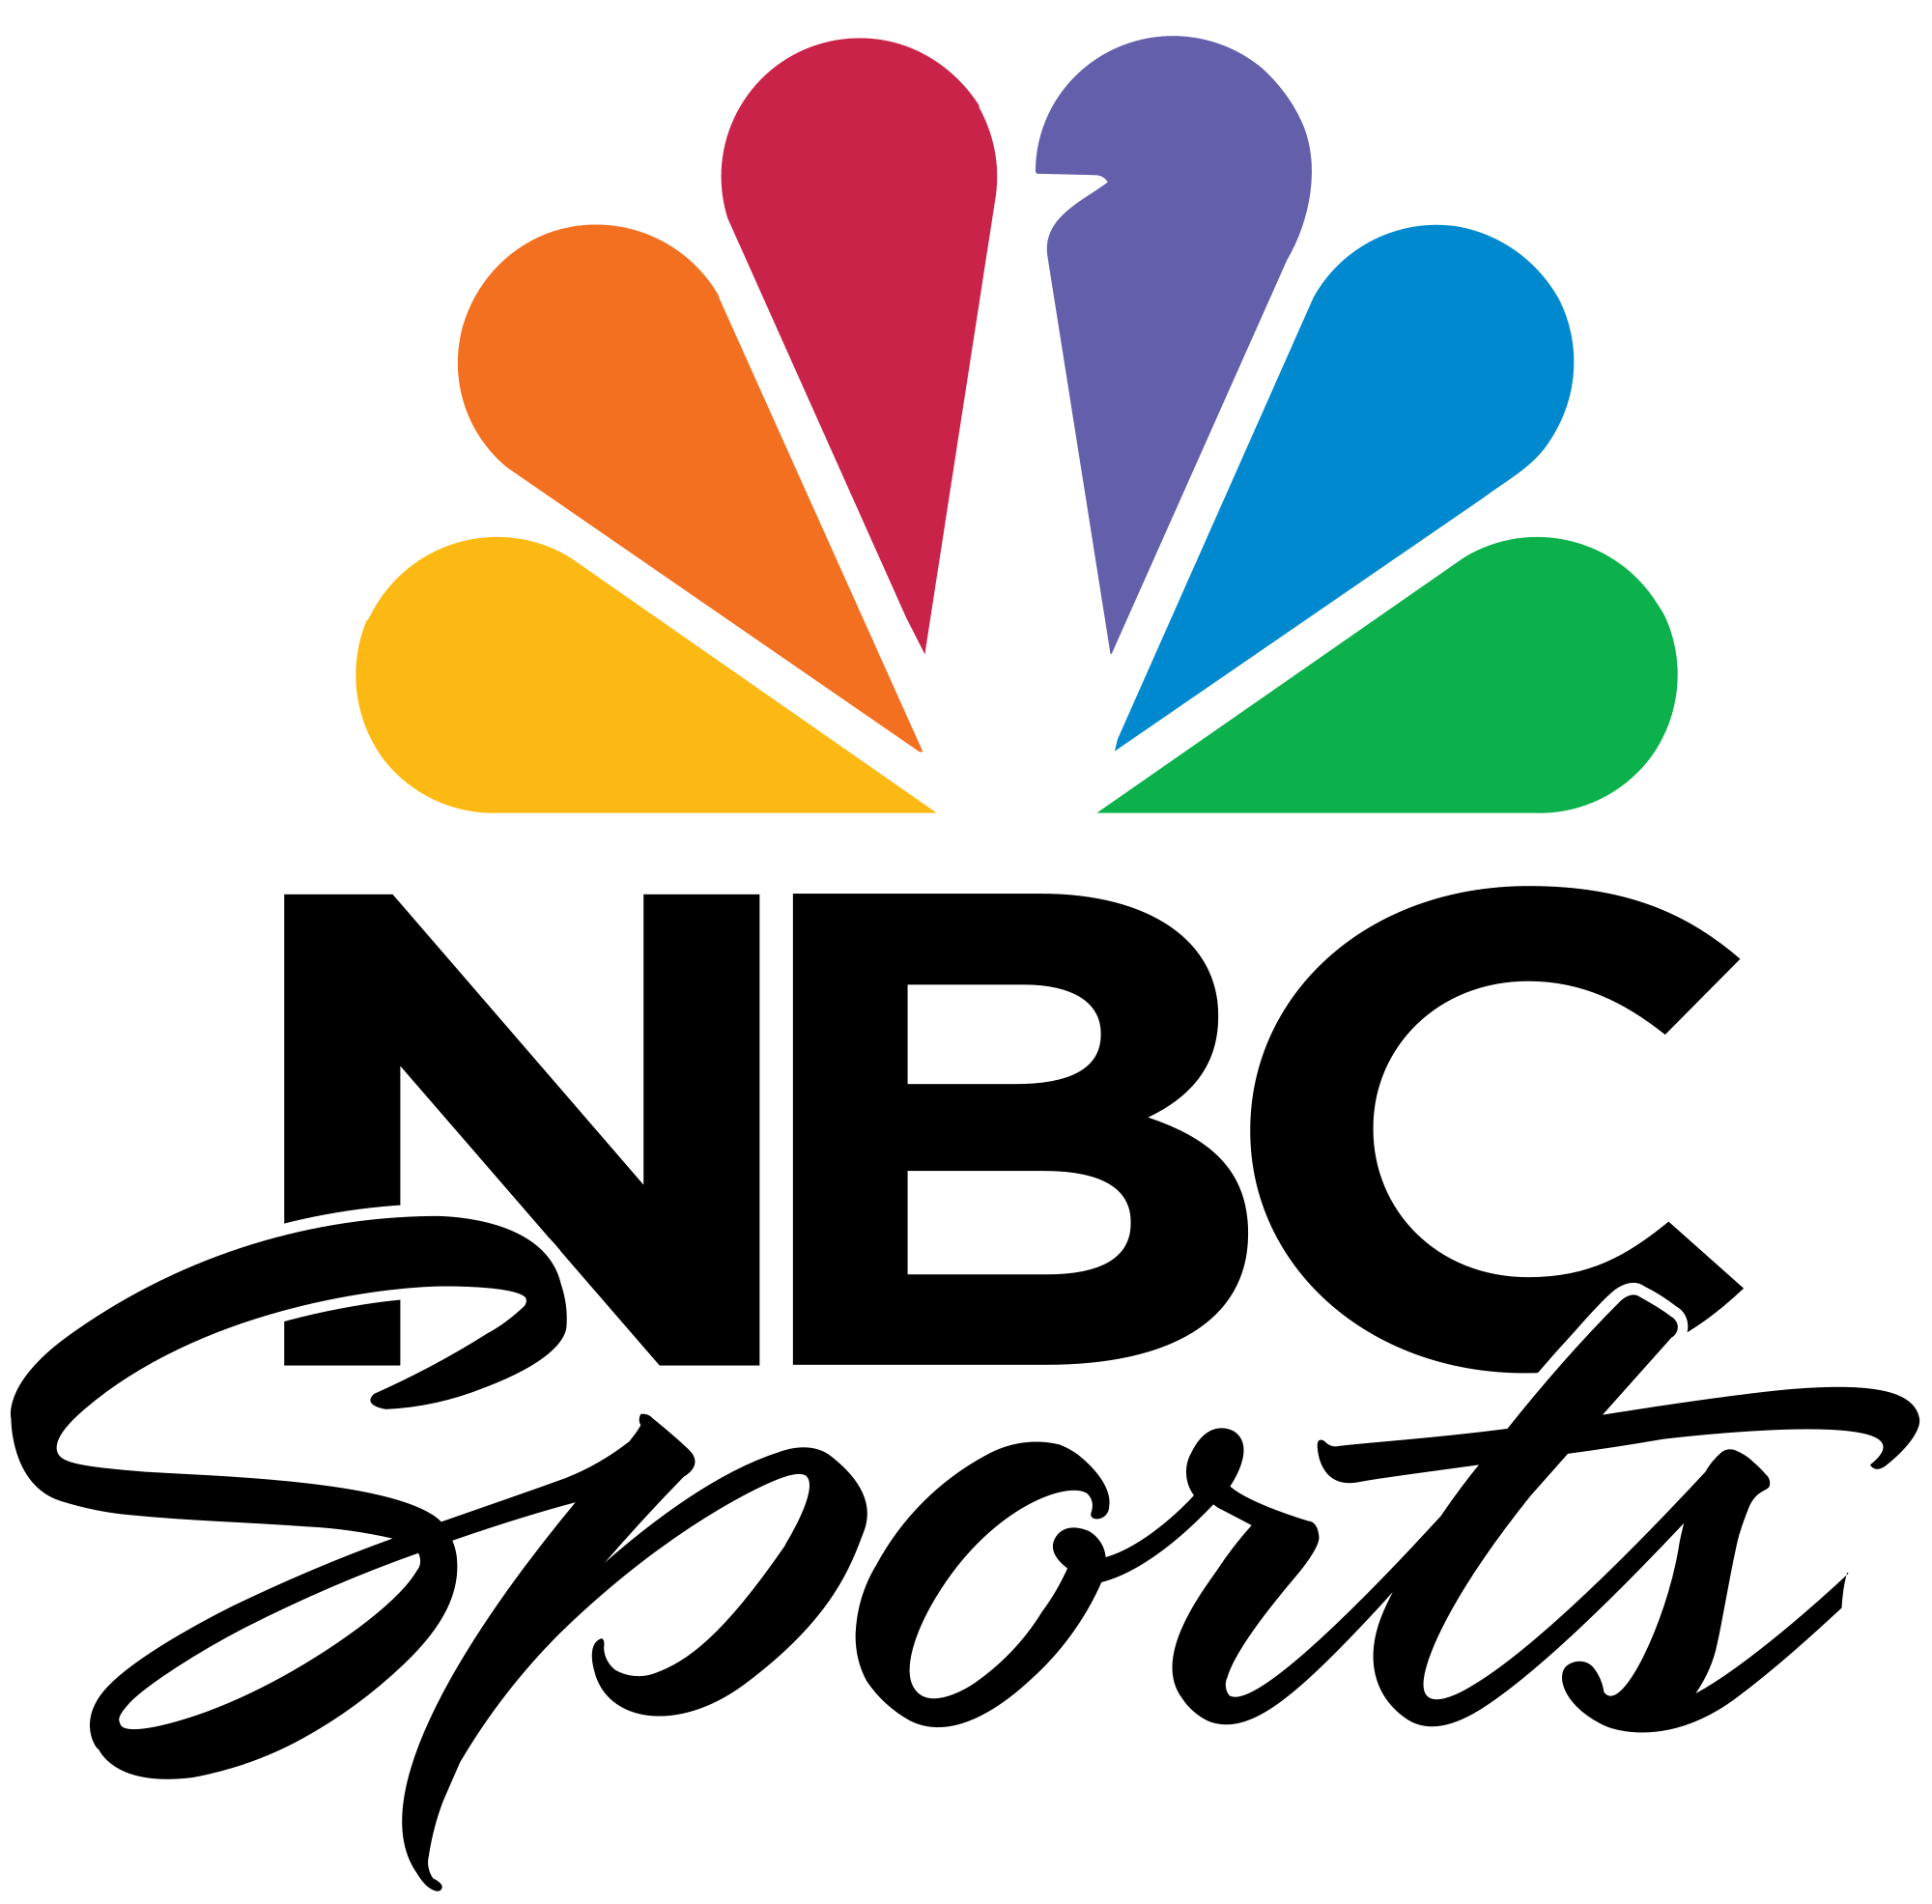 Nbcsn Logo - NBC Sports